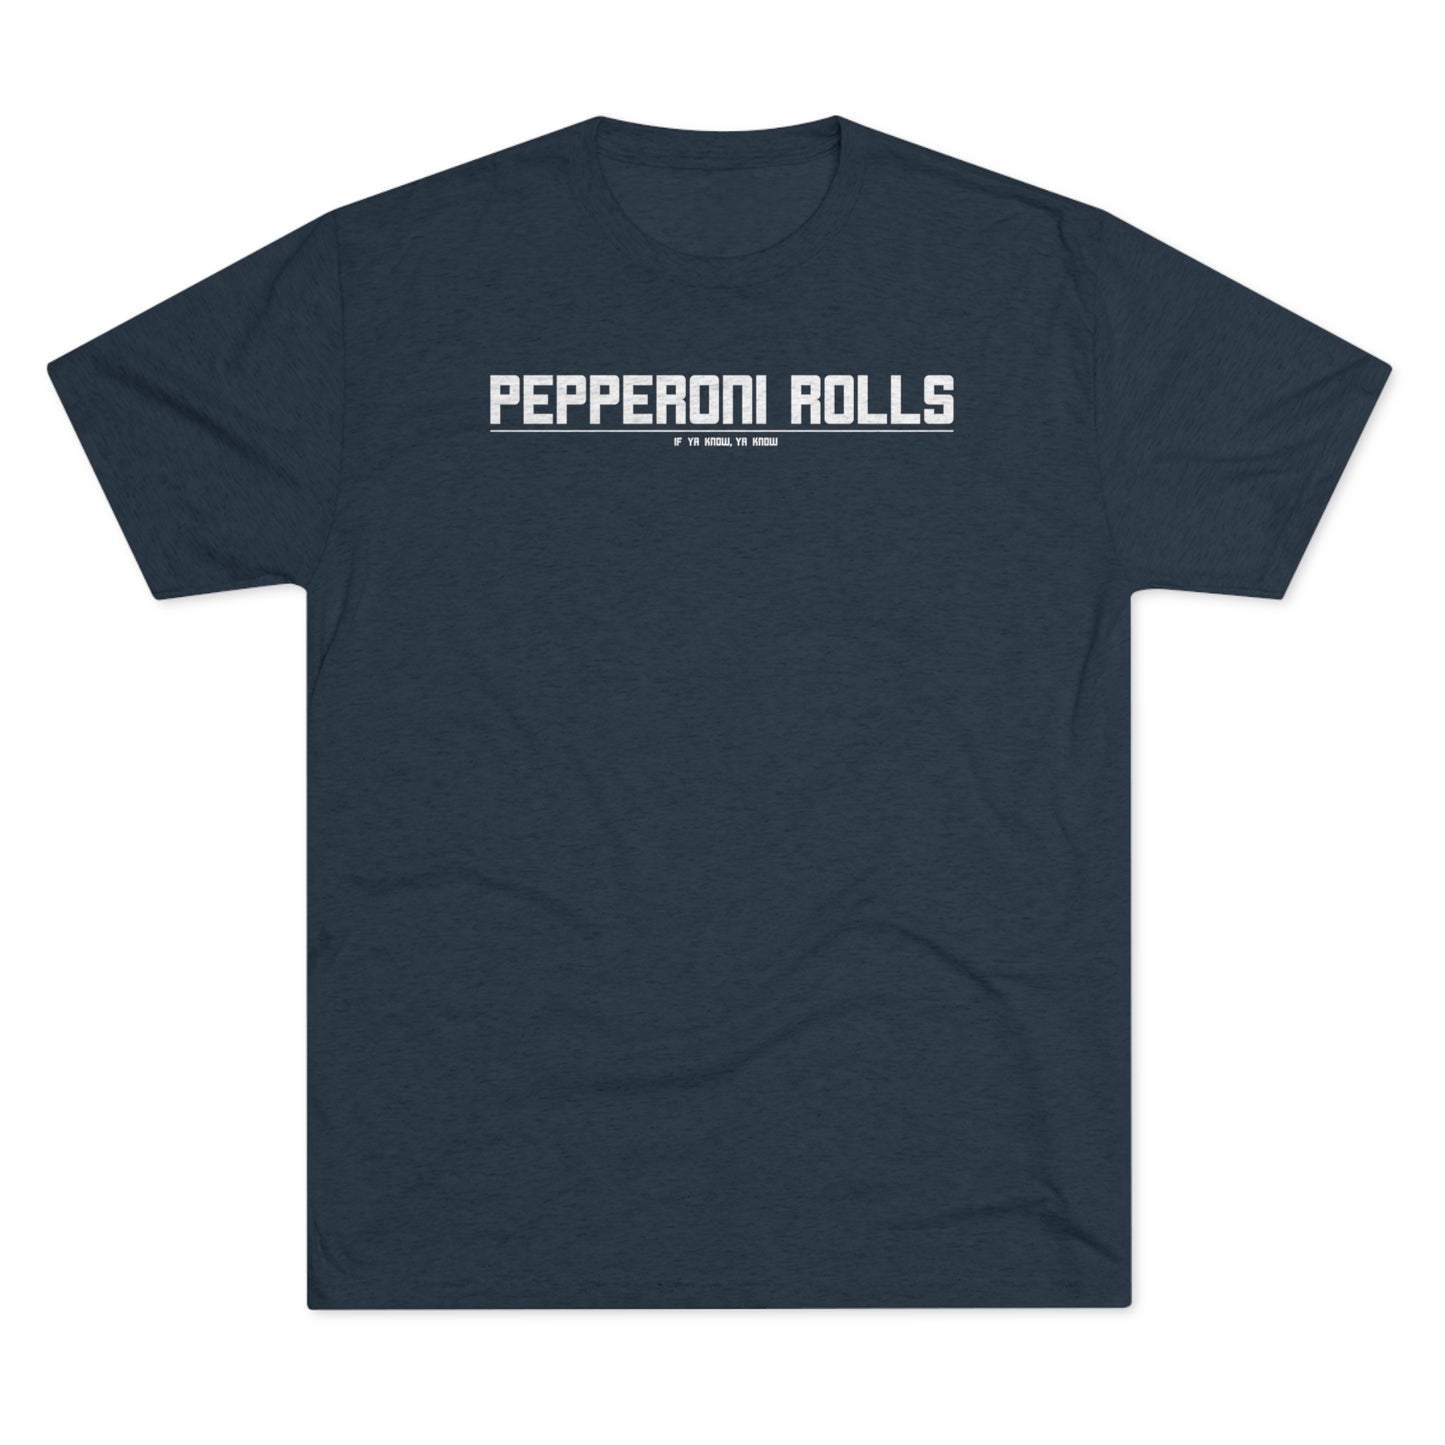 PEPPERONI ROLLS (IF YA KNOW YA KNOW) - Unisex Tri-Blend Crew Tee